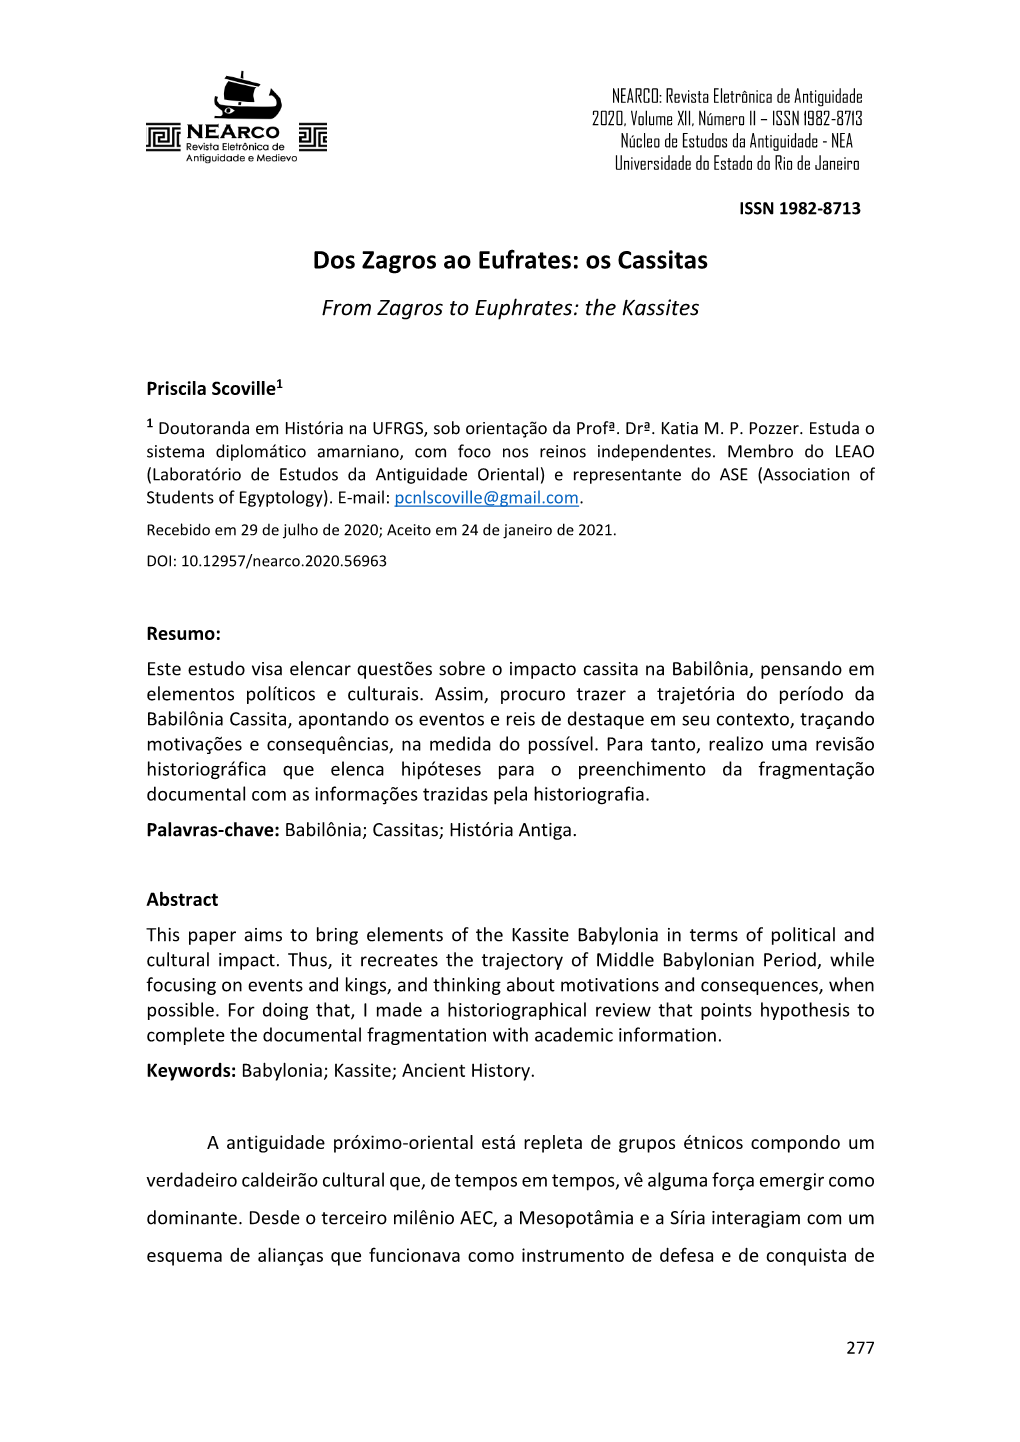 Dos Zagros Ao Eufrates: Os Cassitas from Zagros to Euphrates: the Kassites